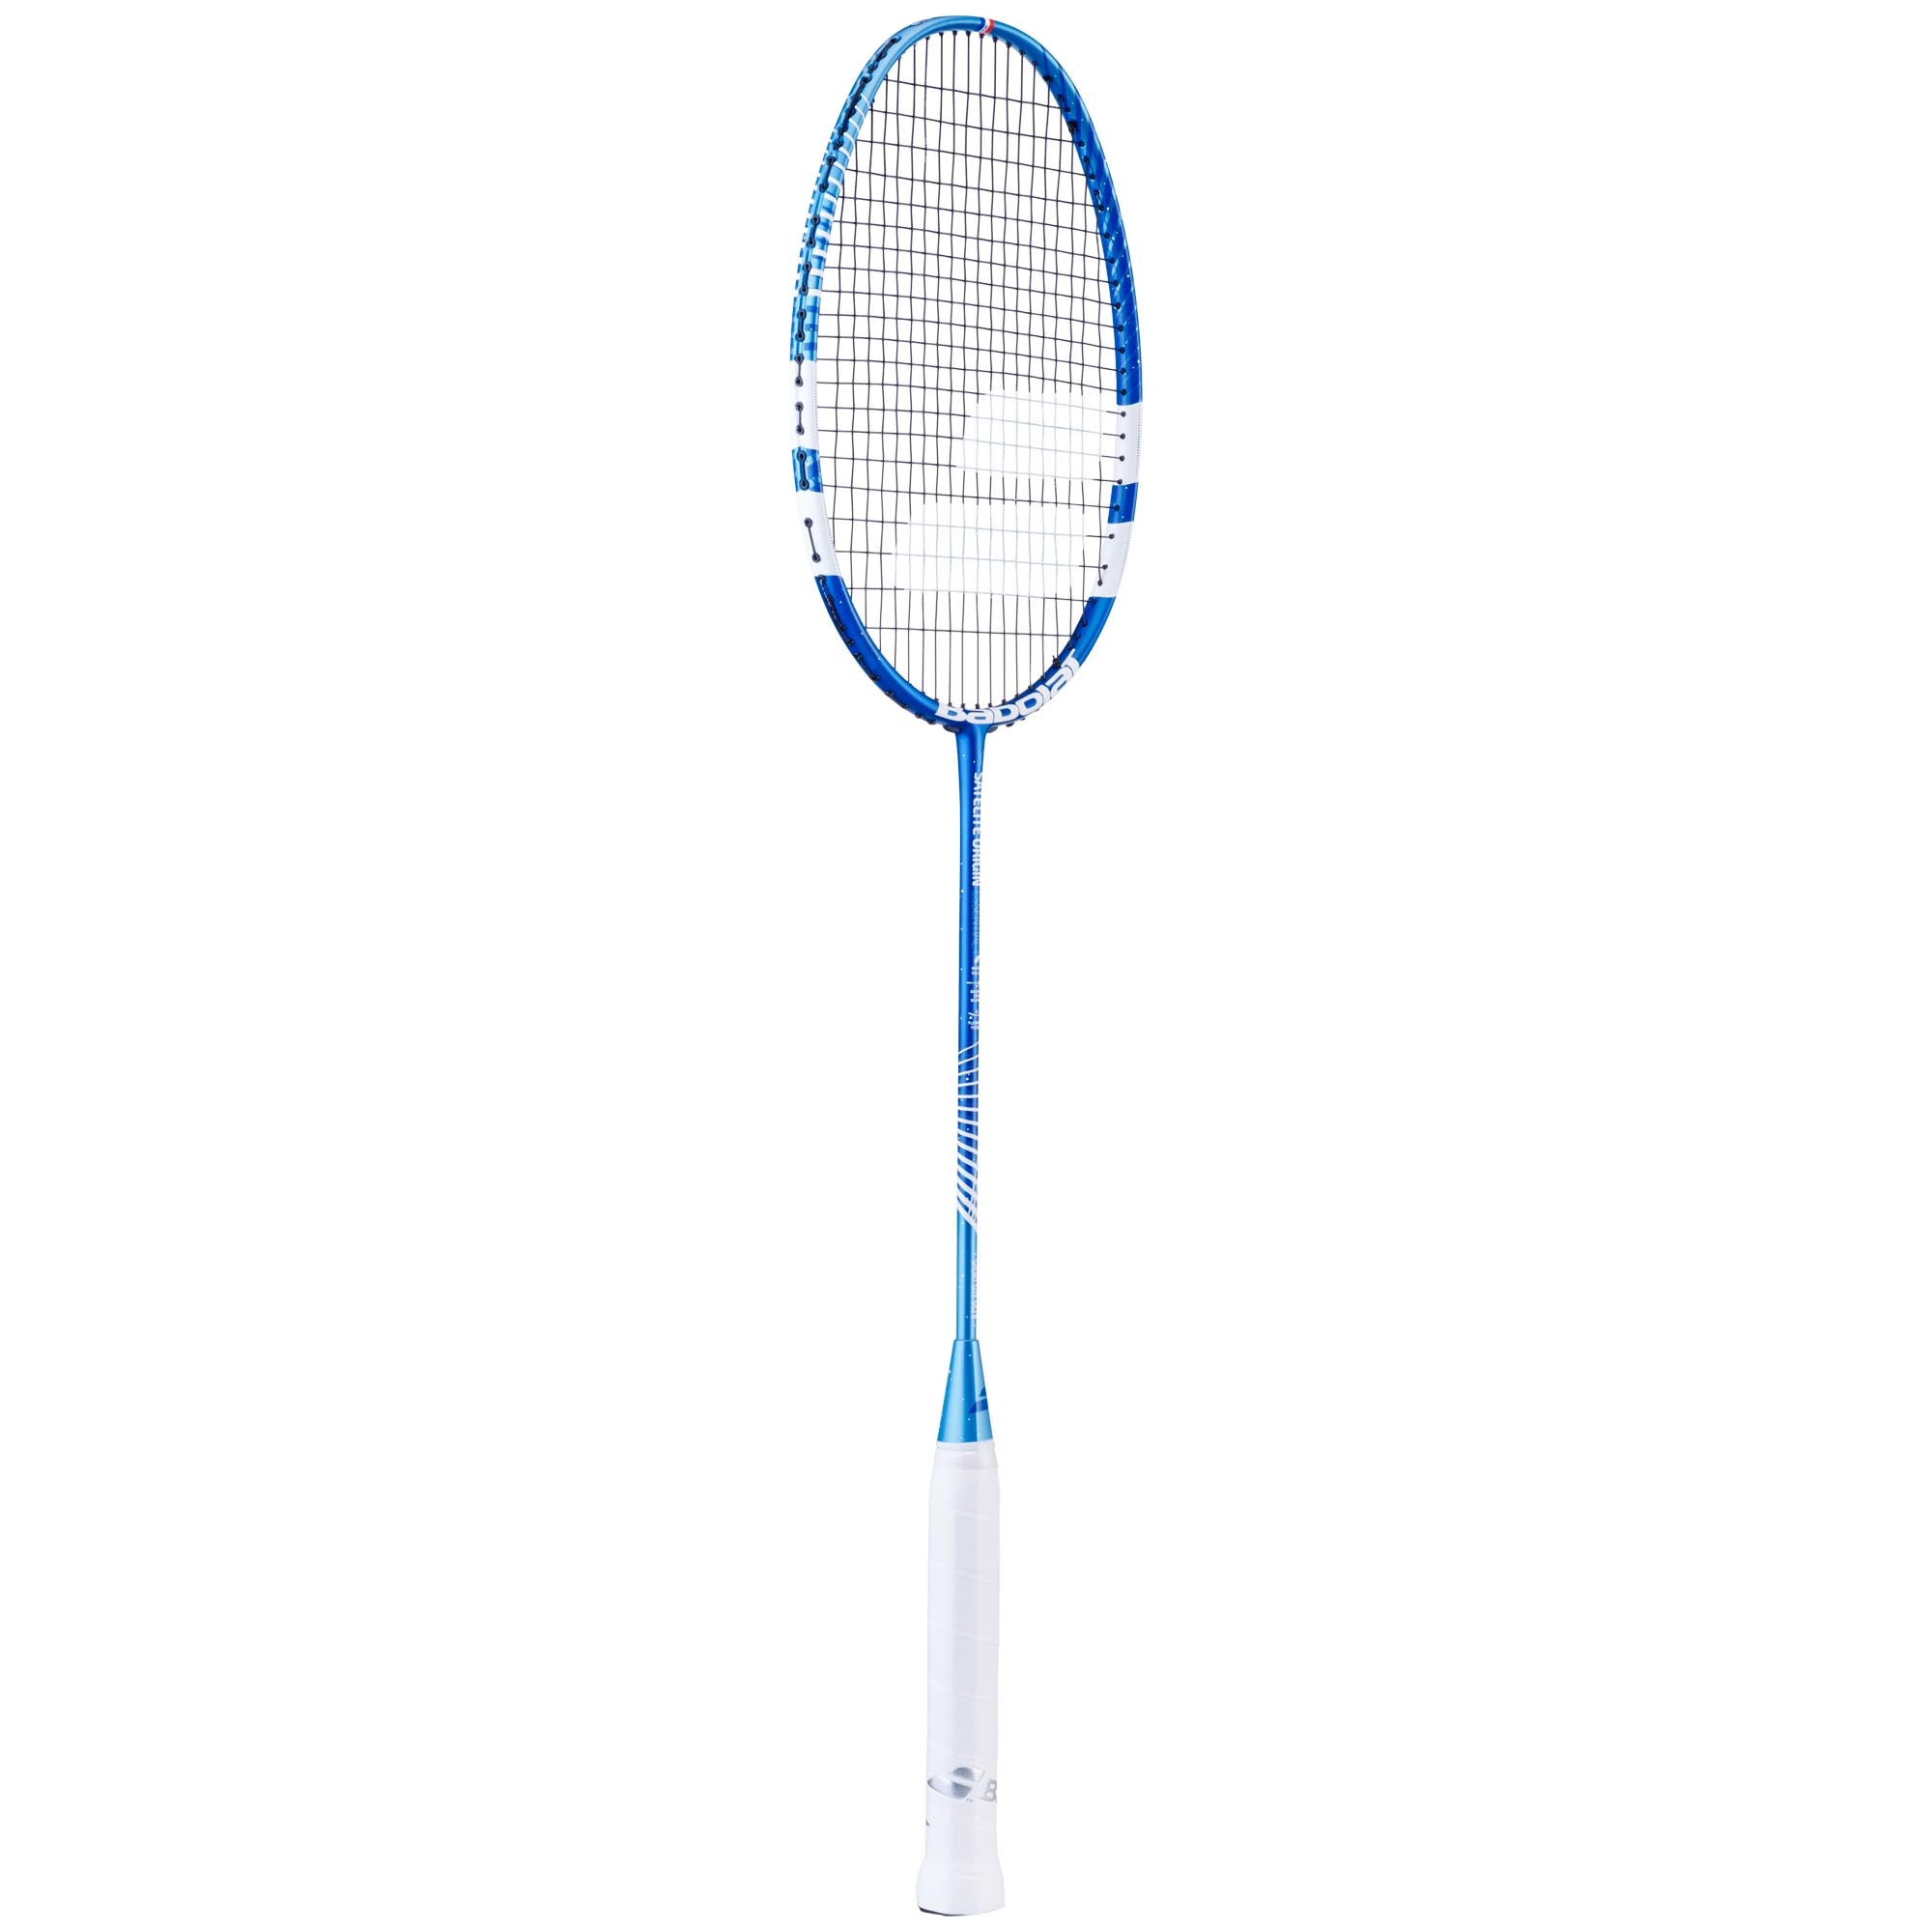 Which badminton grips do I need? - KW FLEX racket specialist